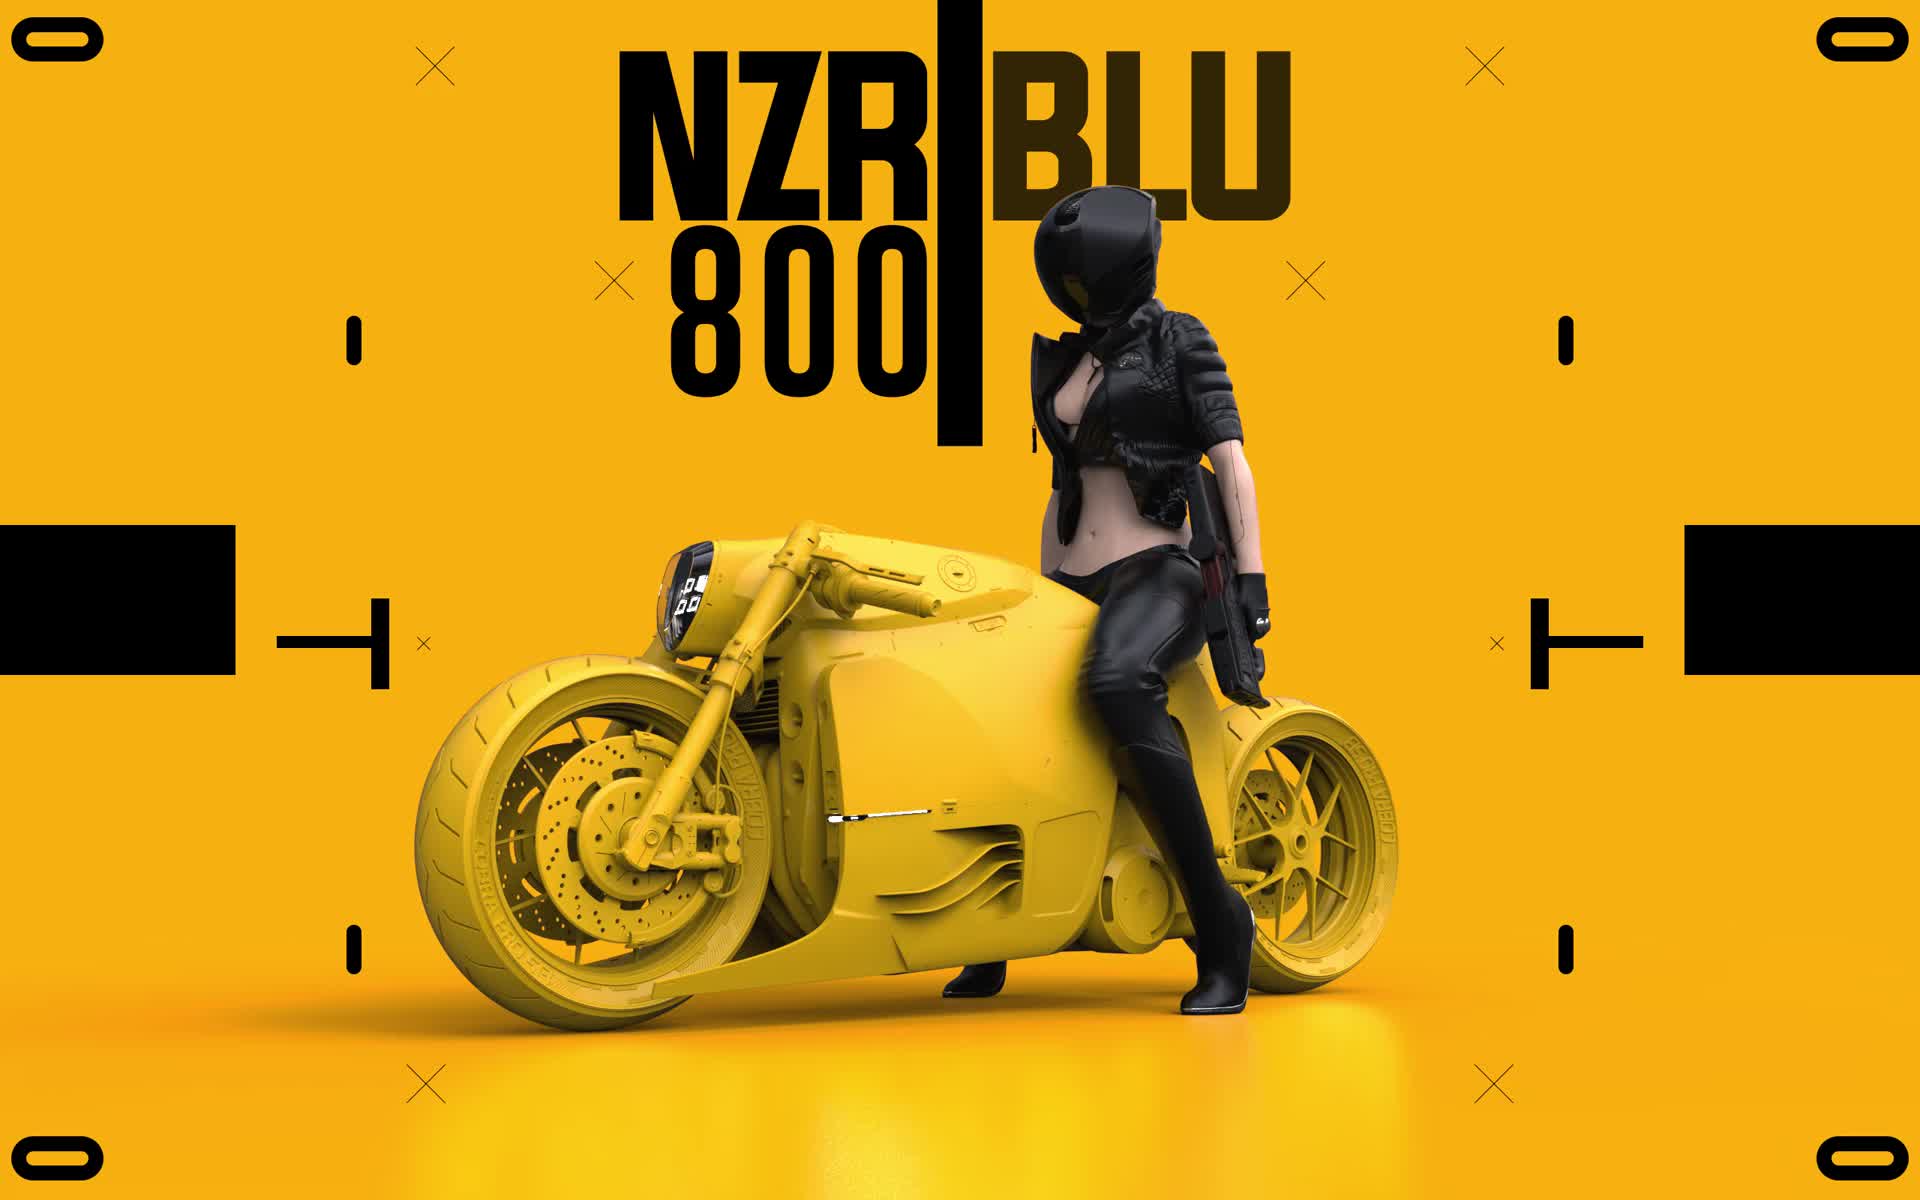 Nelson Tai - Concept Art & Design - NZR800 concept moto